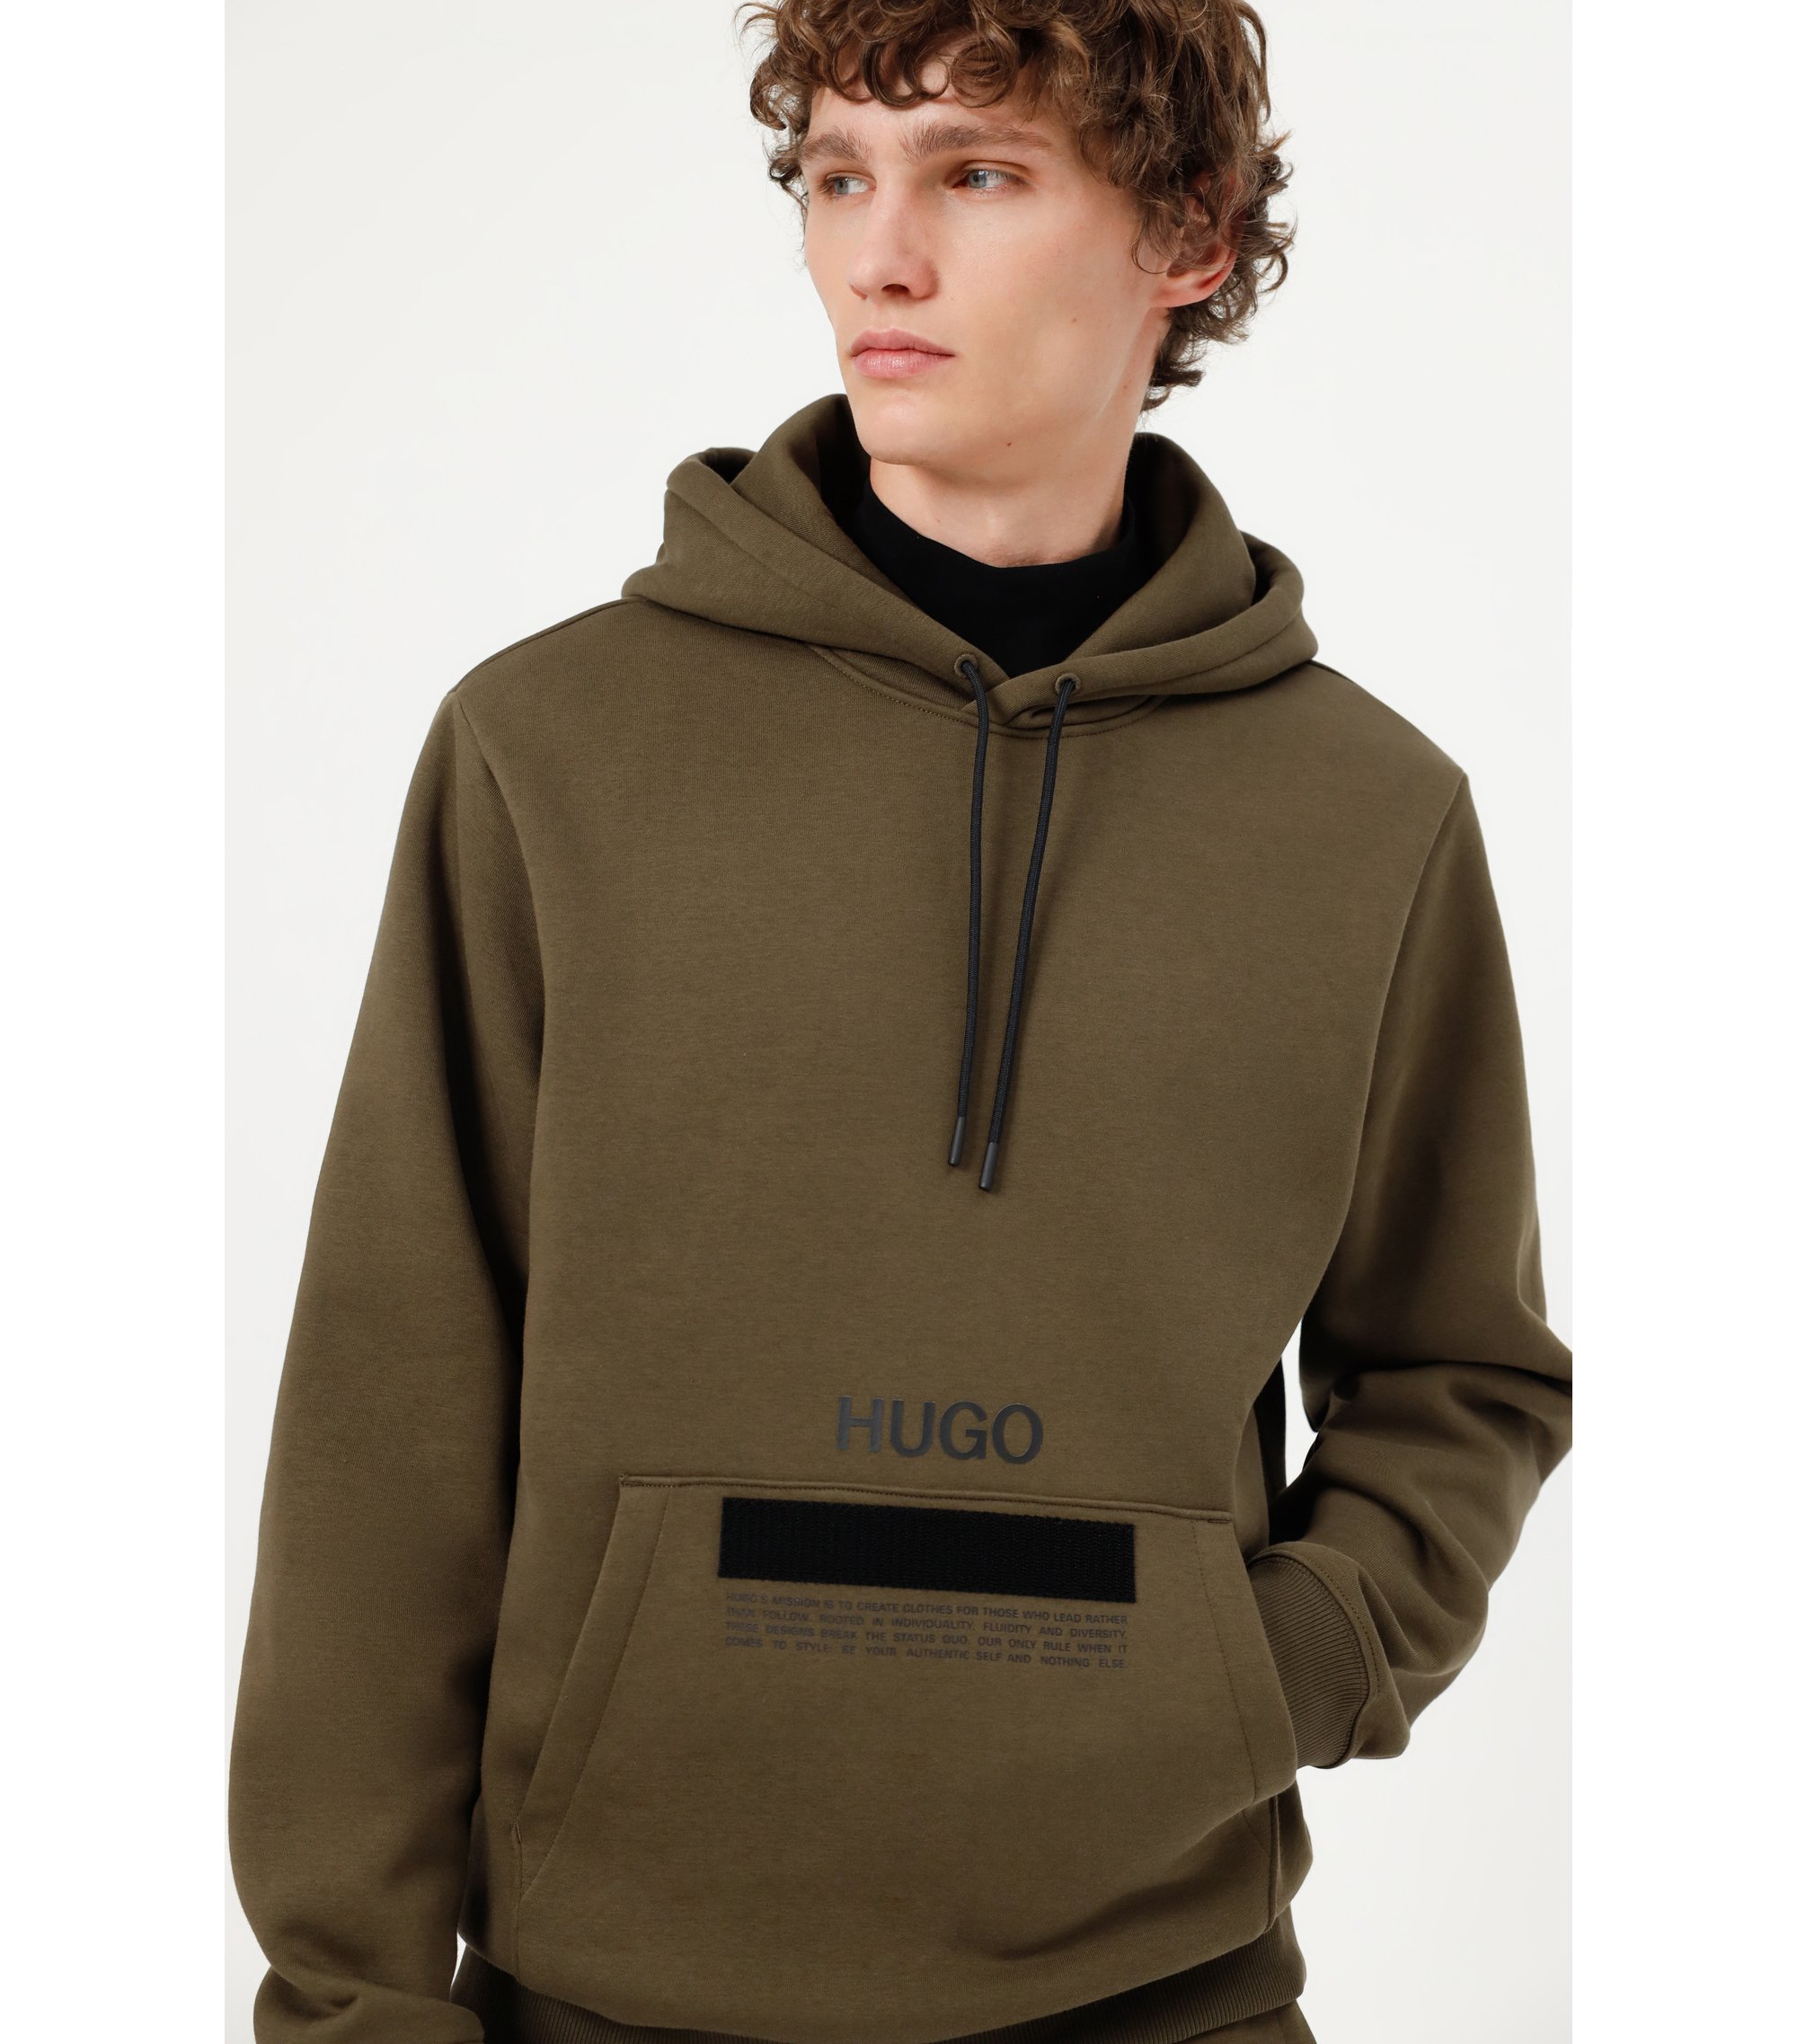 Hugo Boss Mens Hooded Sweatshirt Selnio Grey 50390019 031